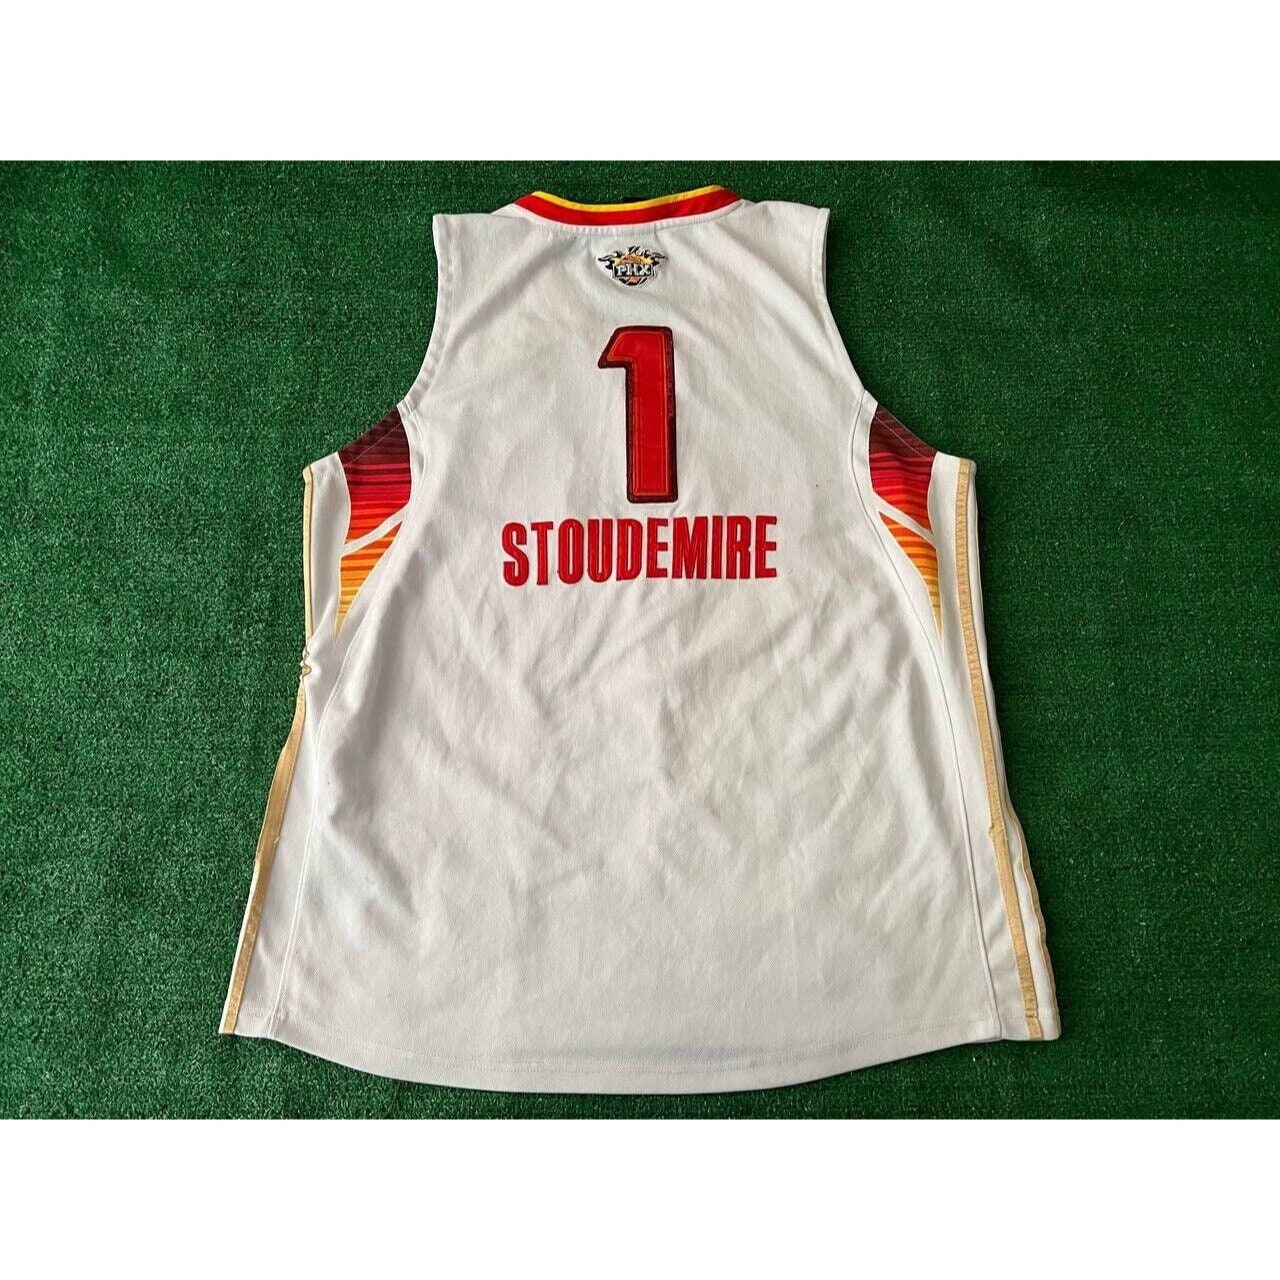 2004-05 Amar'e Stoudemire Game Worn Phoenix Suns Jersey., Lot #50853